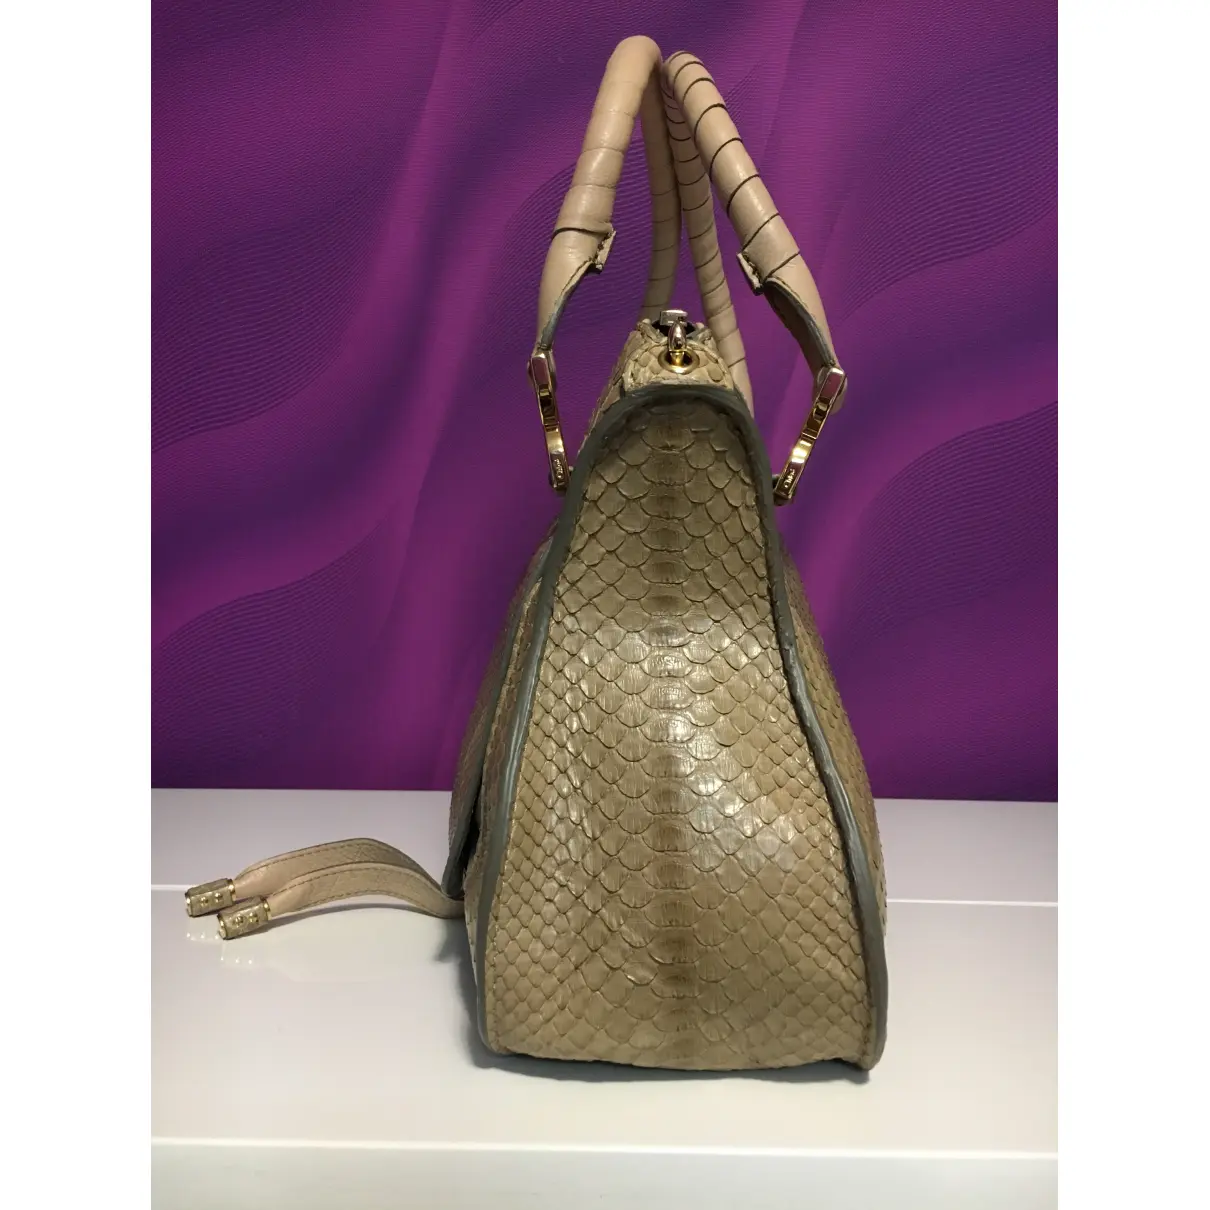 Buy Chloé Marcie python handbag online